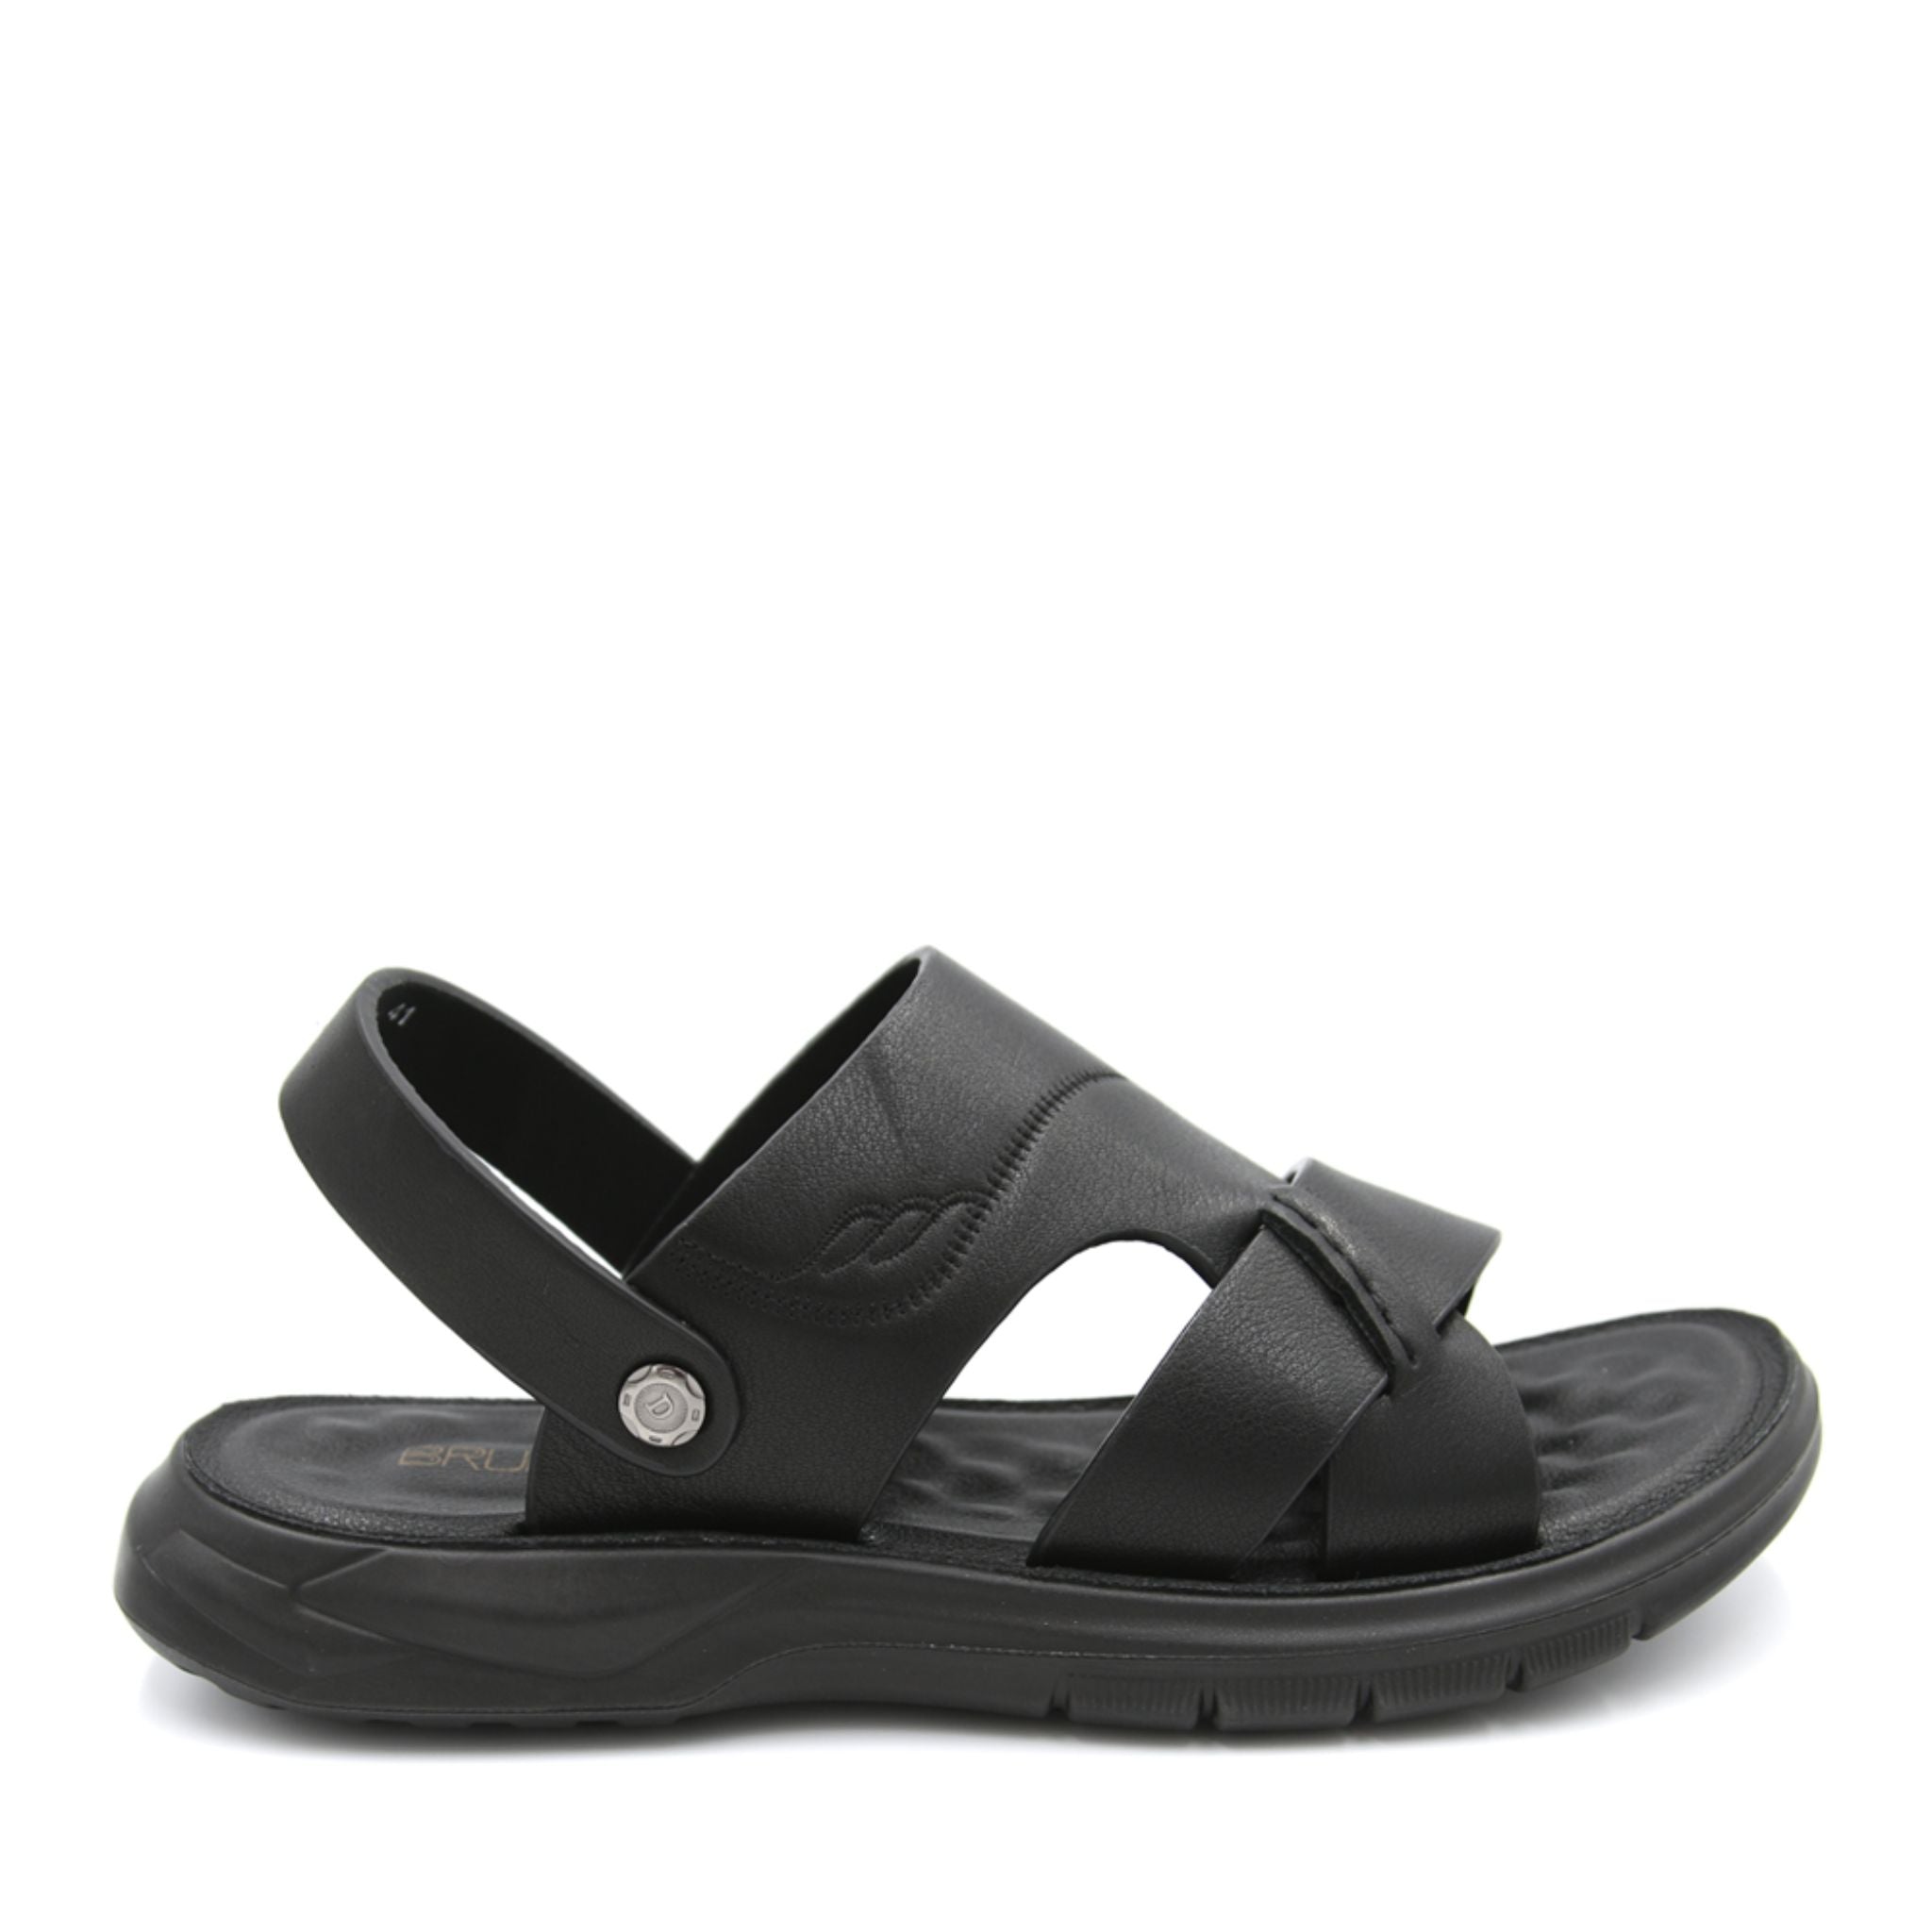 Bruno Co. Kiki Leather Sandals - Black